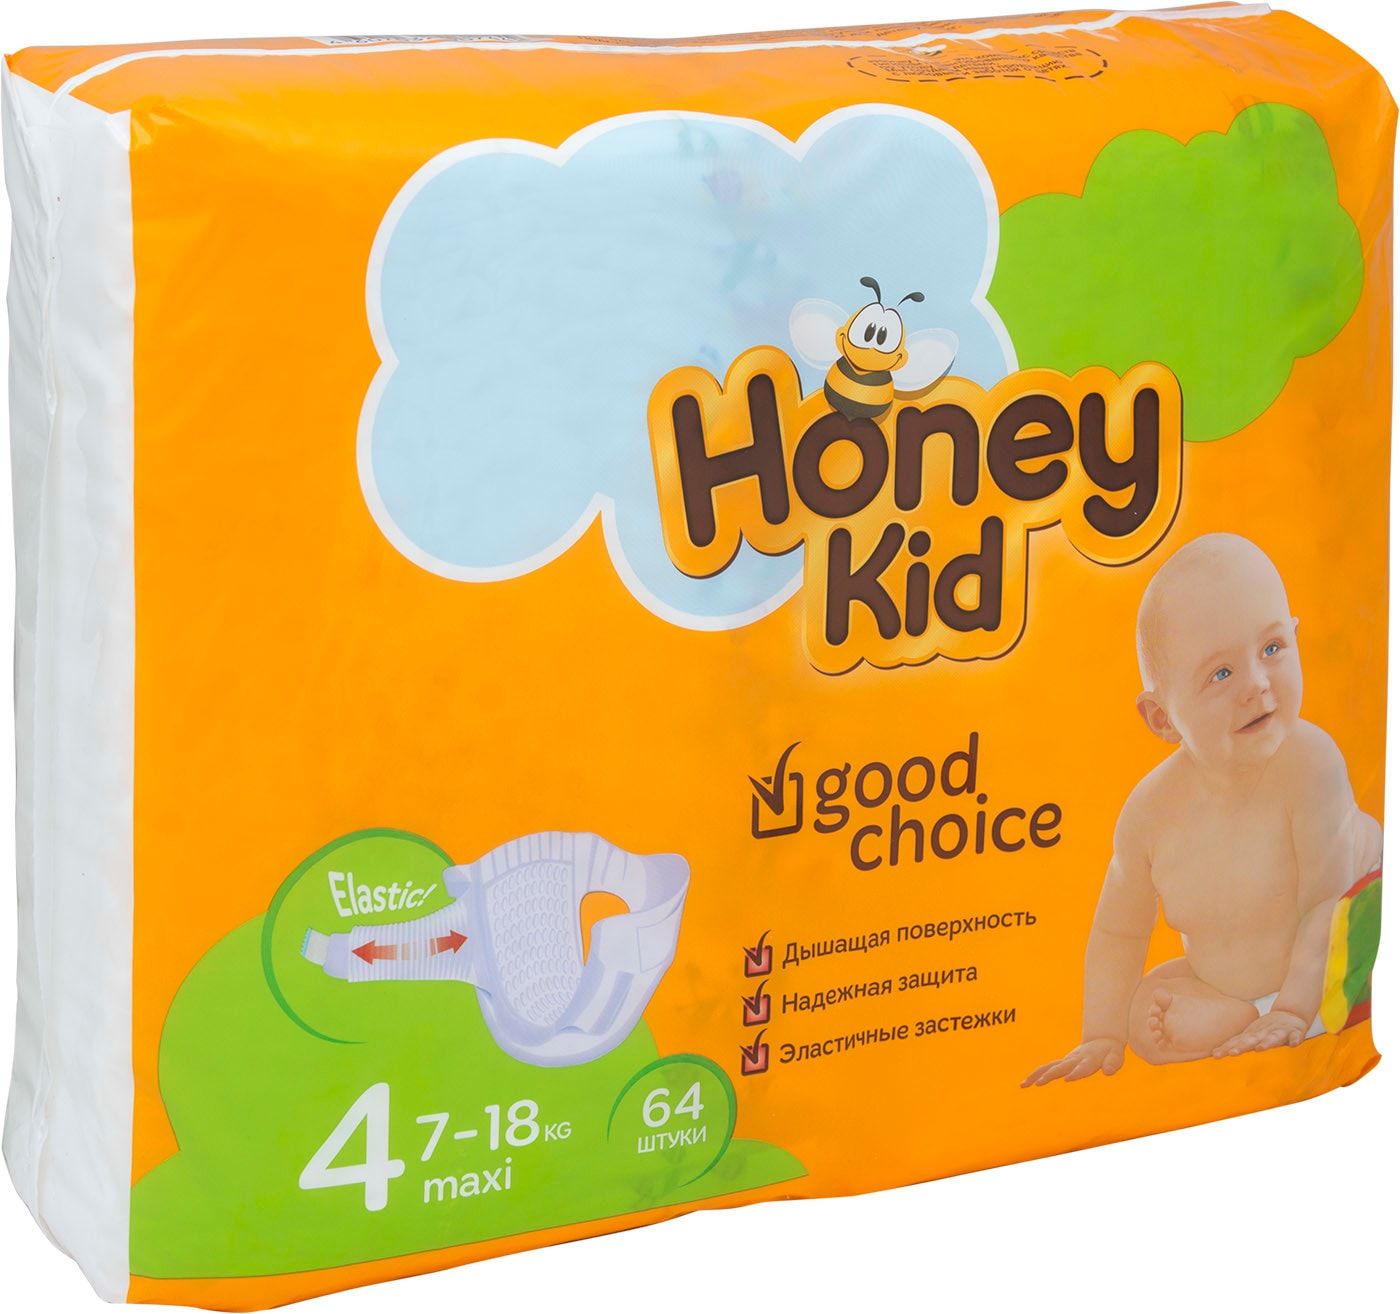 Кид цена. Подгузники Хани КИД 4. Honey Kid подгузники 4 макси. Подгузники Honey Kid 4 Maxi (7-18кг) 64 шт..